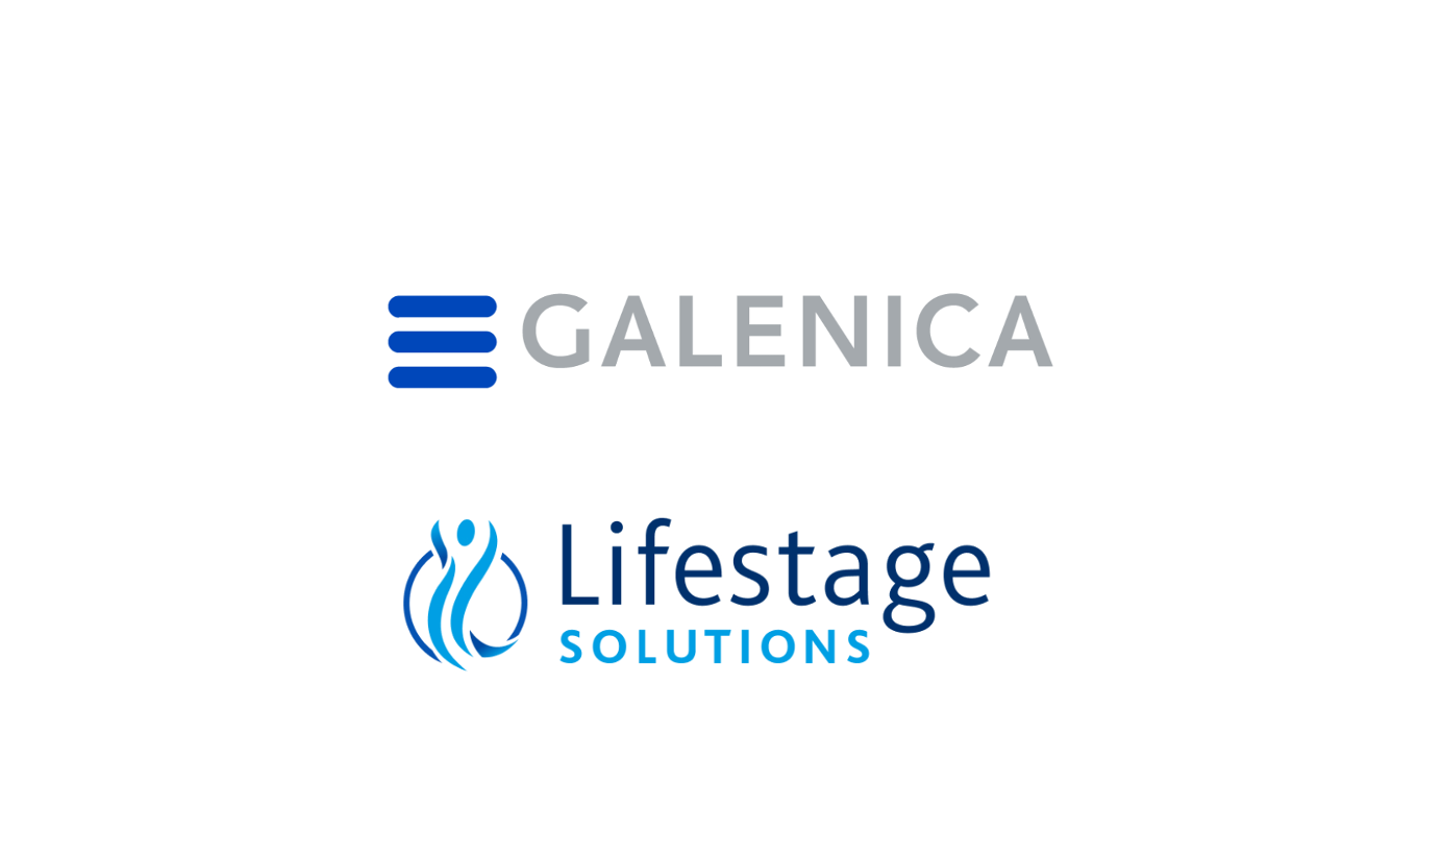 Galenica Lifestage